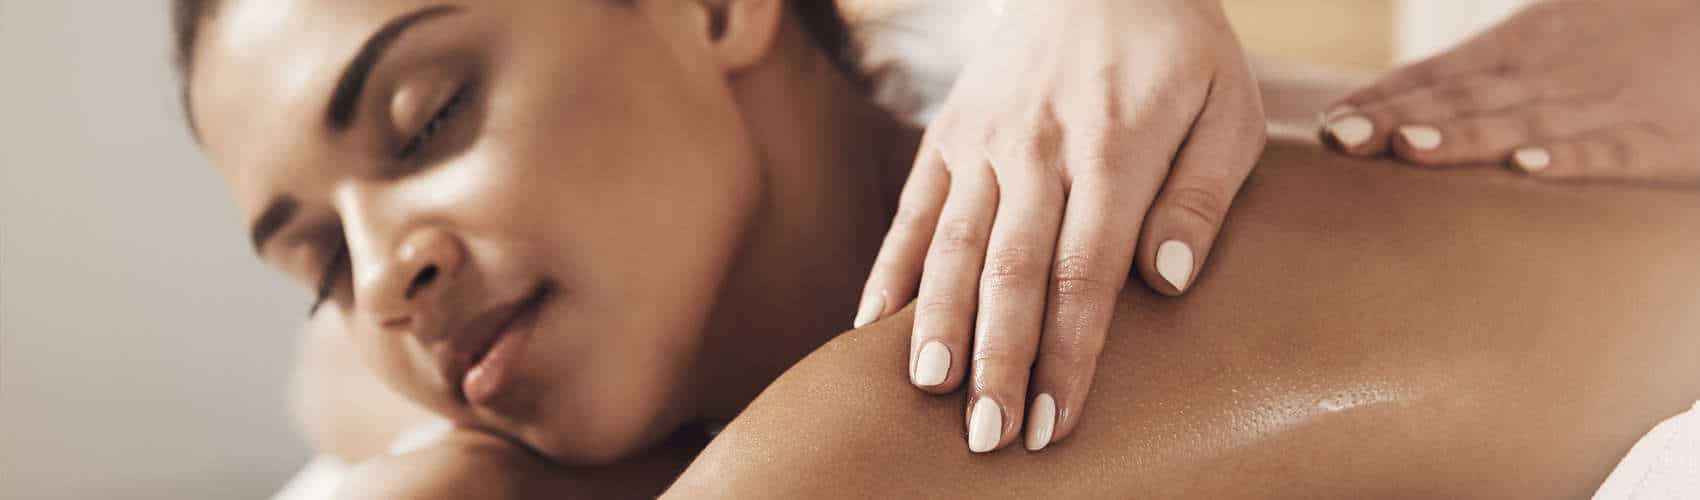 Swedish Massage, Full Body Massage, best massage in Dubai